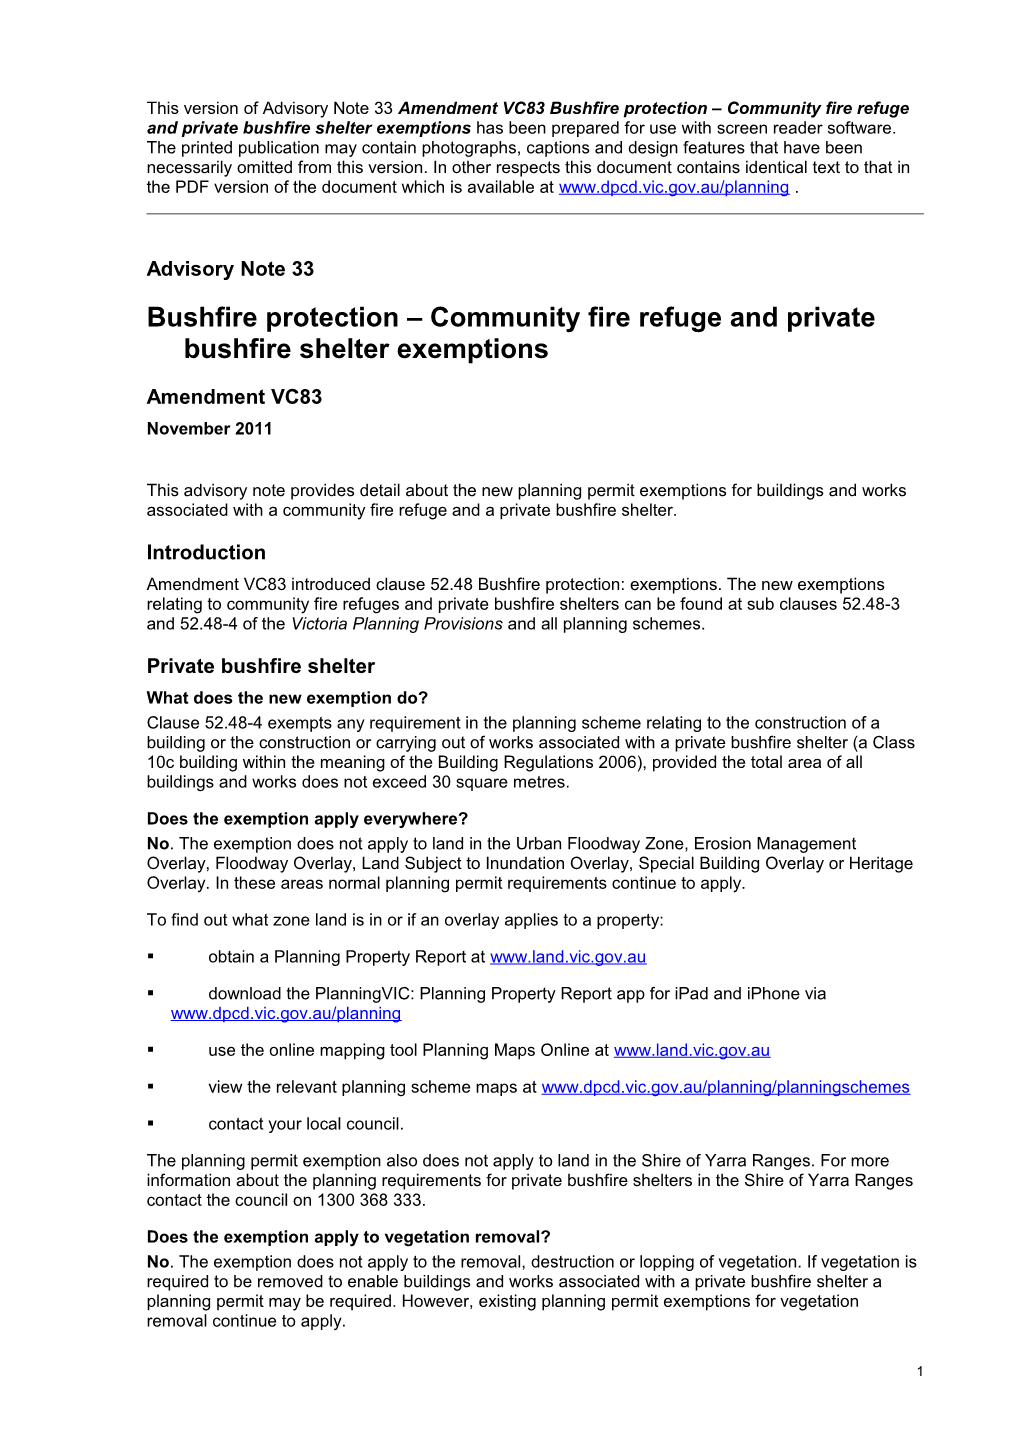 Advisory Note 33 Amendment VC83 Bushfire Protection Community Fire Refuge and Private Bushfire